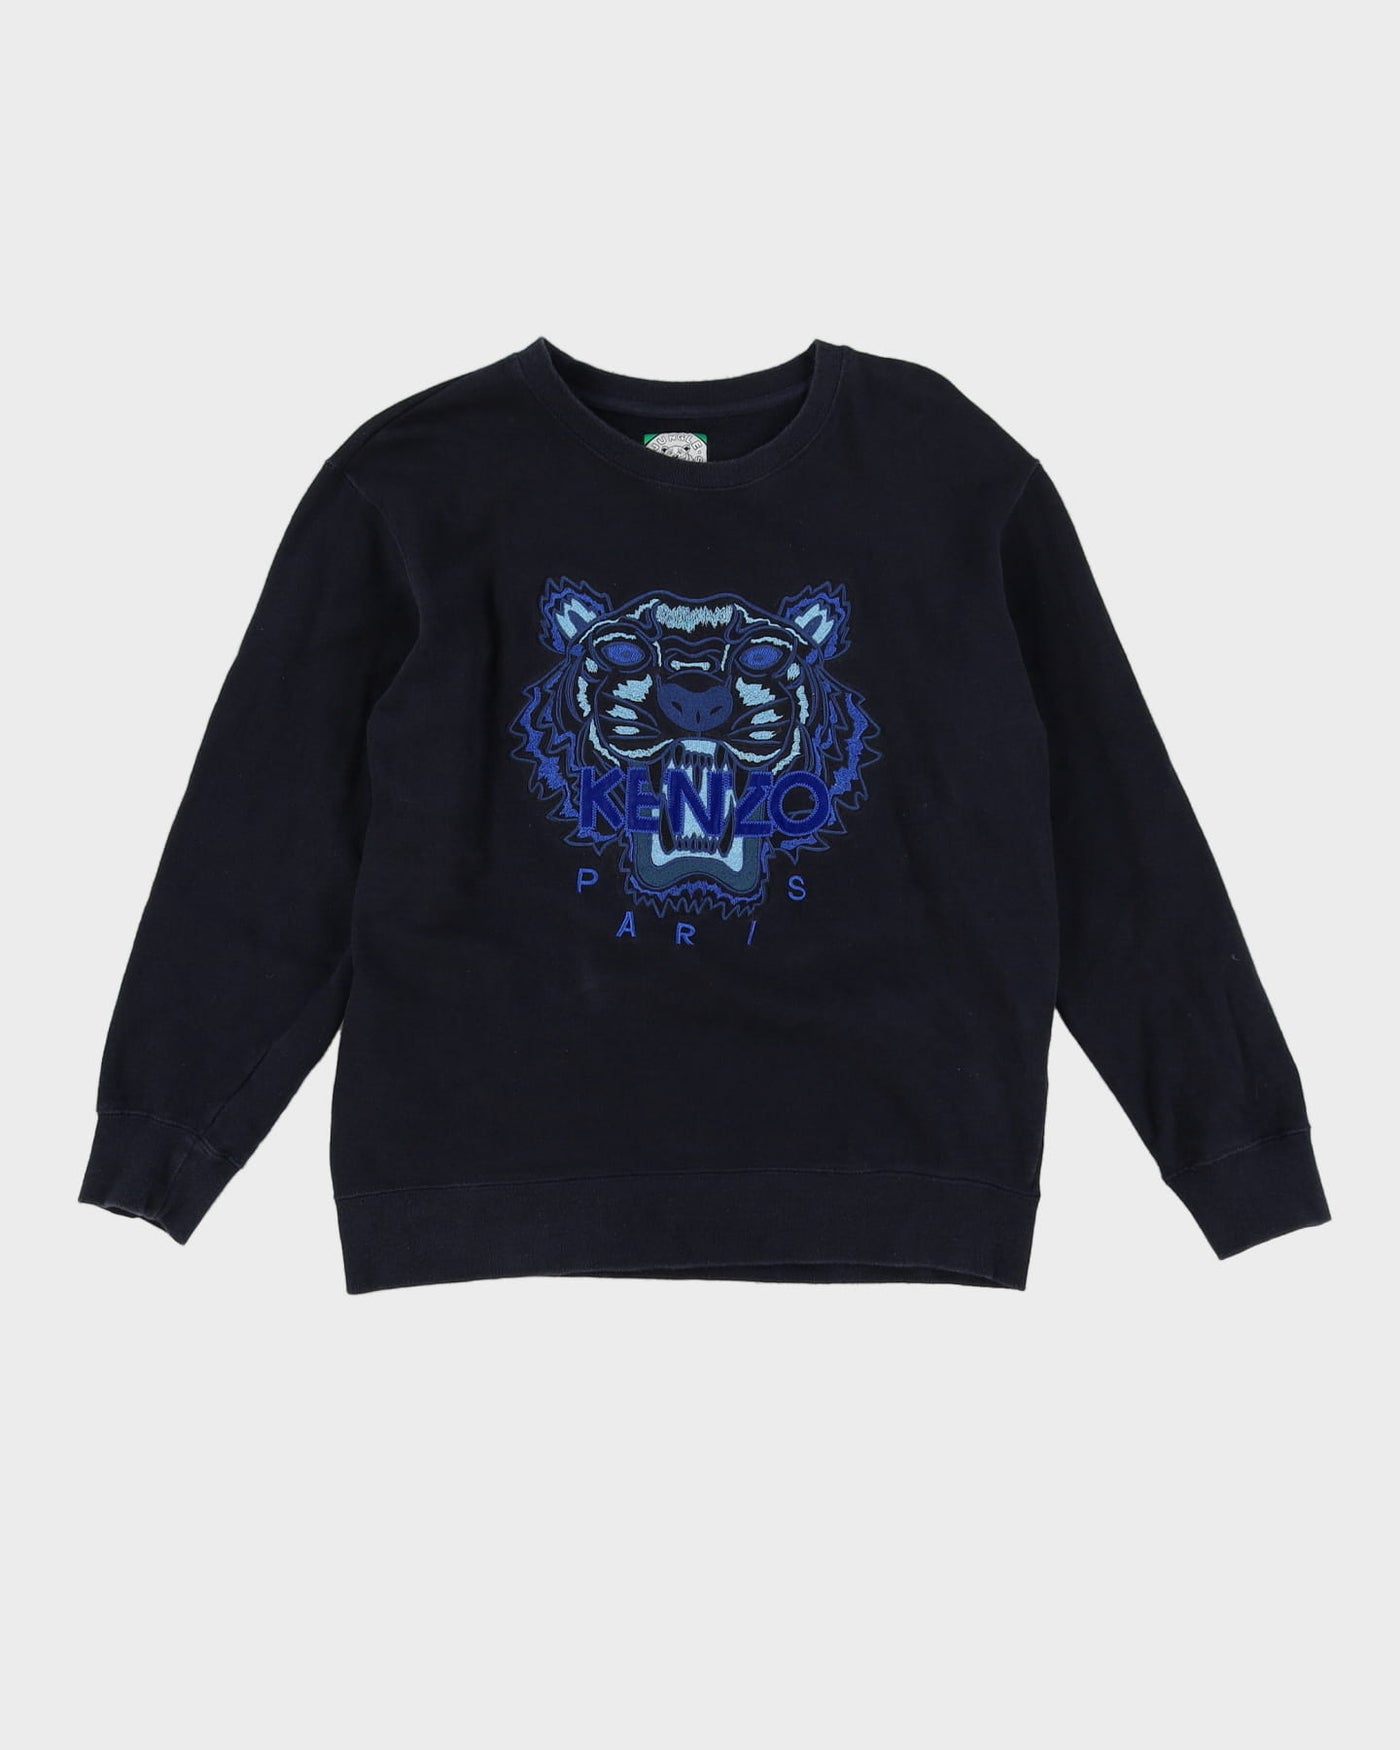 Kenzo Paris Navy Embroidered Tiger Graphic Sweatshirt - XL